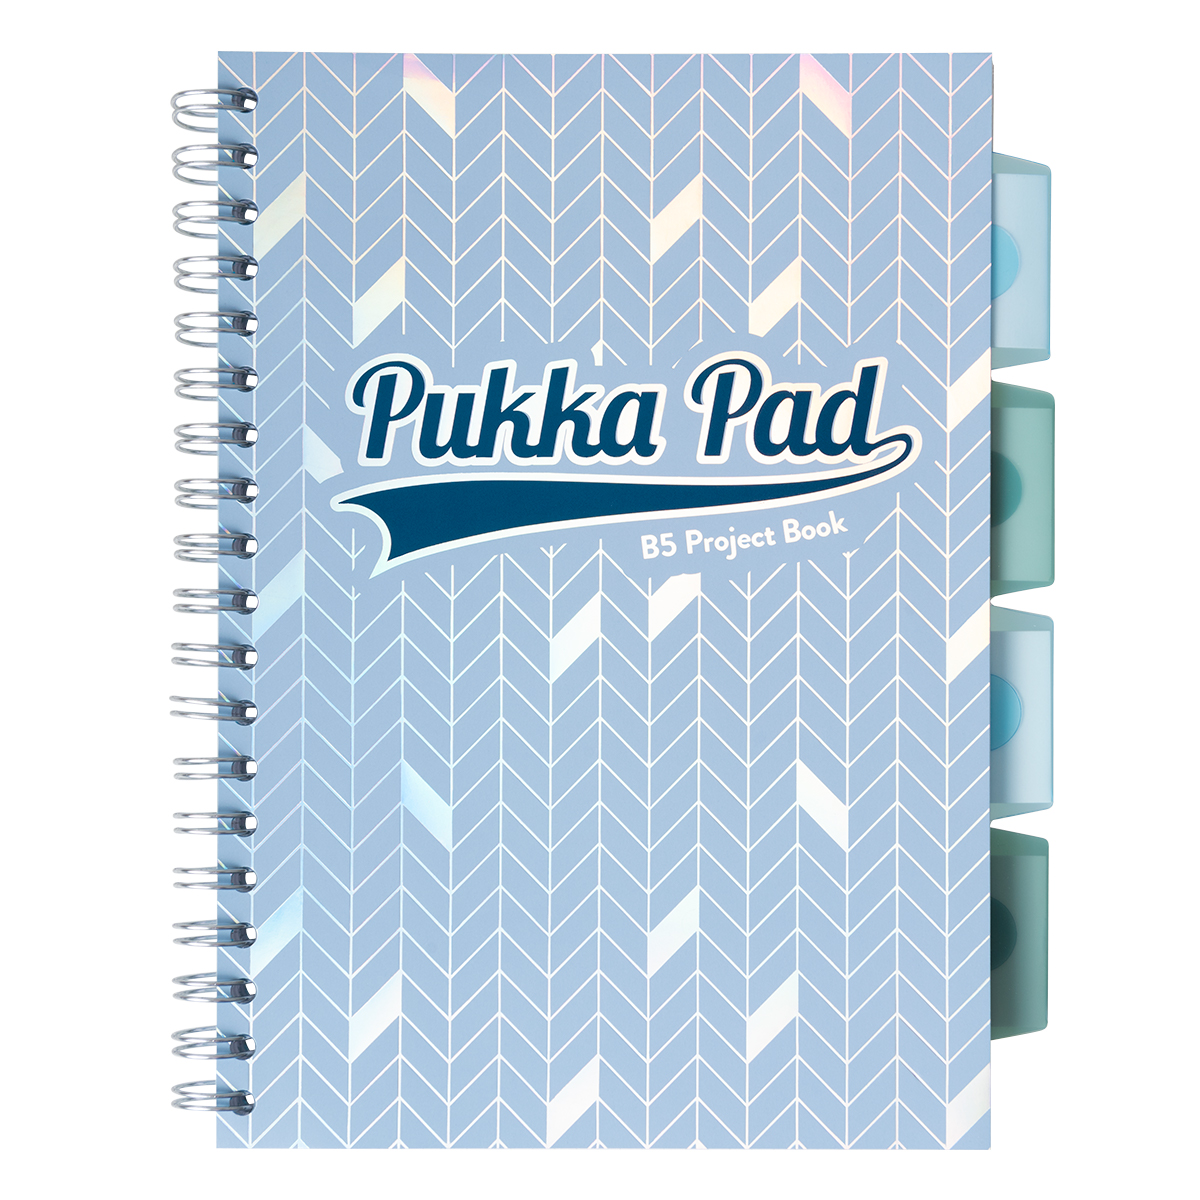 Caiet cu spirala si separatoare Pukka Pad Project Book Glee 200 pag matematica B5 albastru deschis